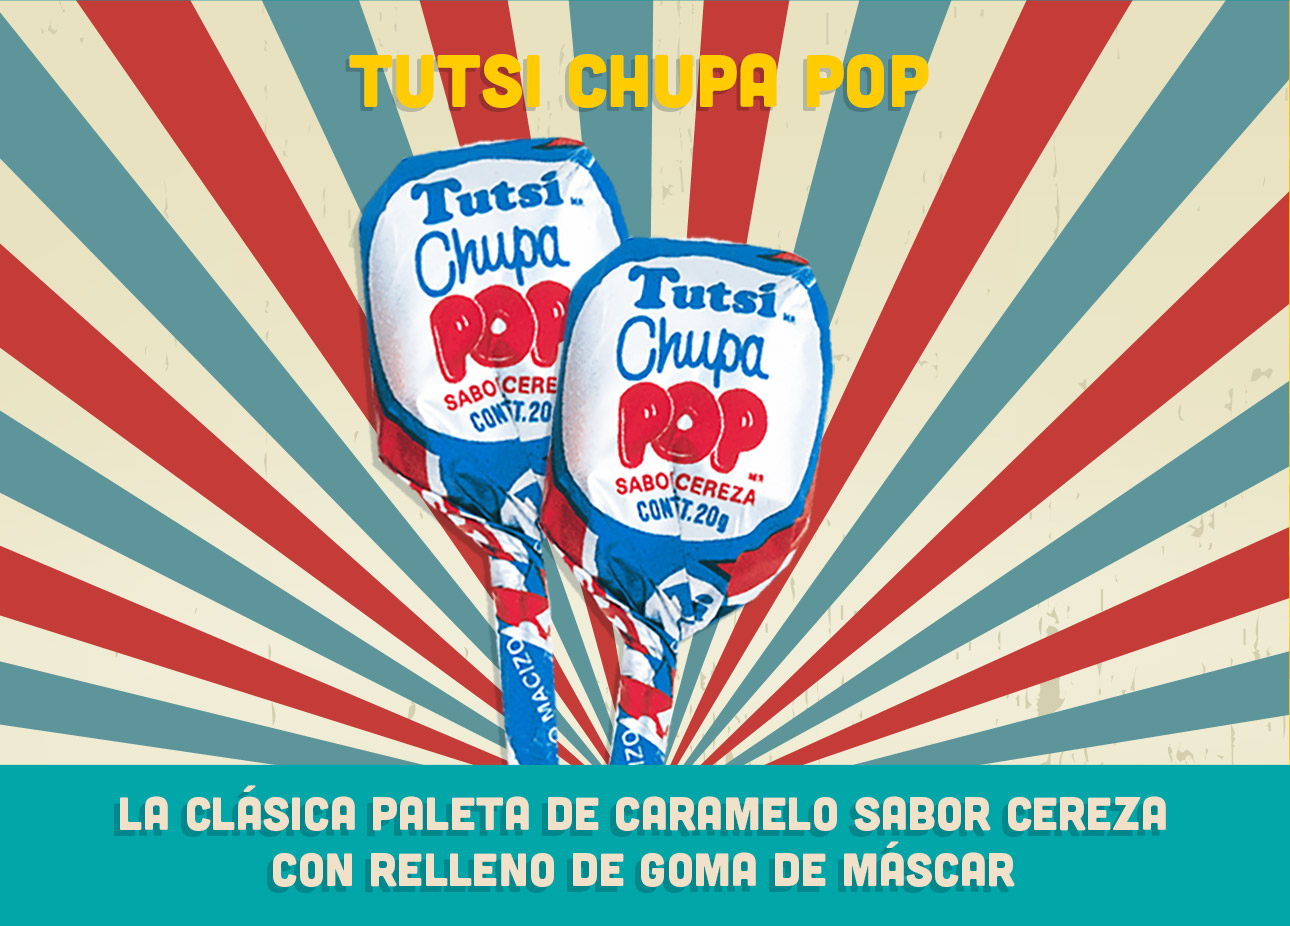 Tutsi Chupa Pop, La clásica paleta de caramelo sabor cereza con relleno de goma de máscar